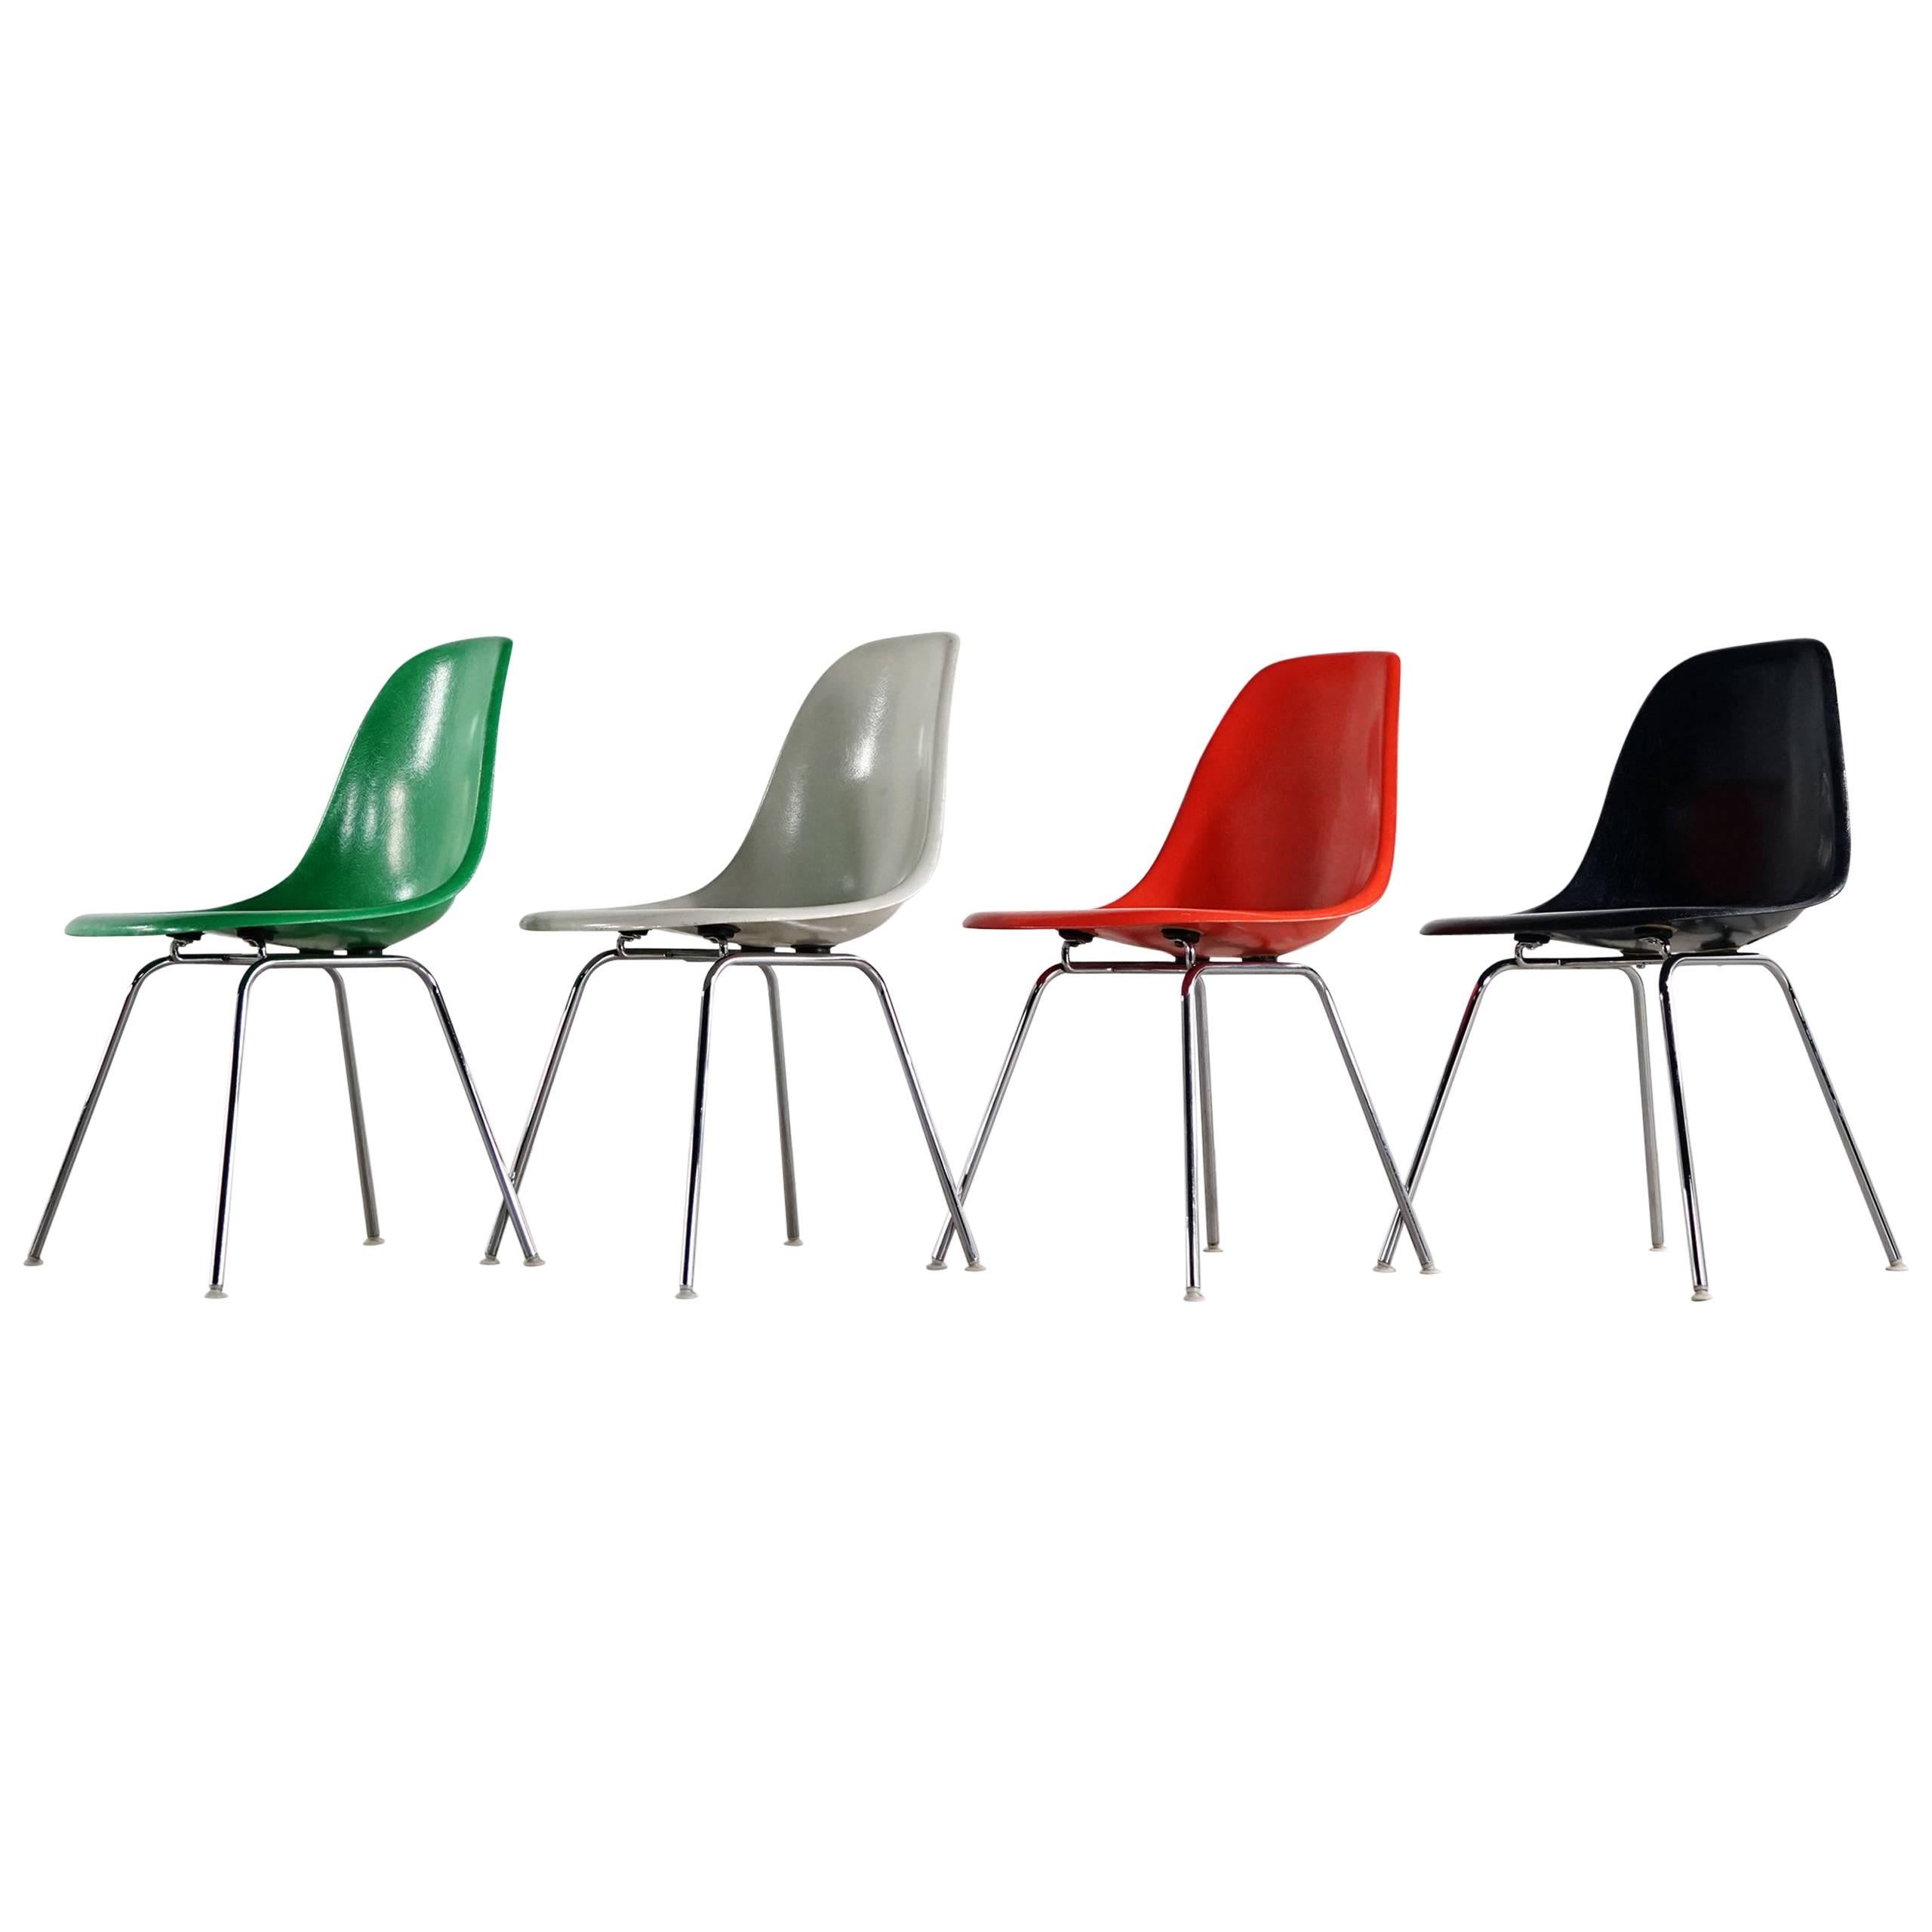 Charles Eames, Rare Set of Four Siede Chairs, Fehlbaum Prod, Vitra Etc